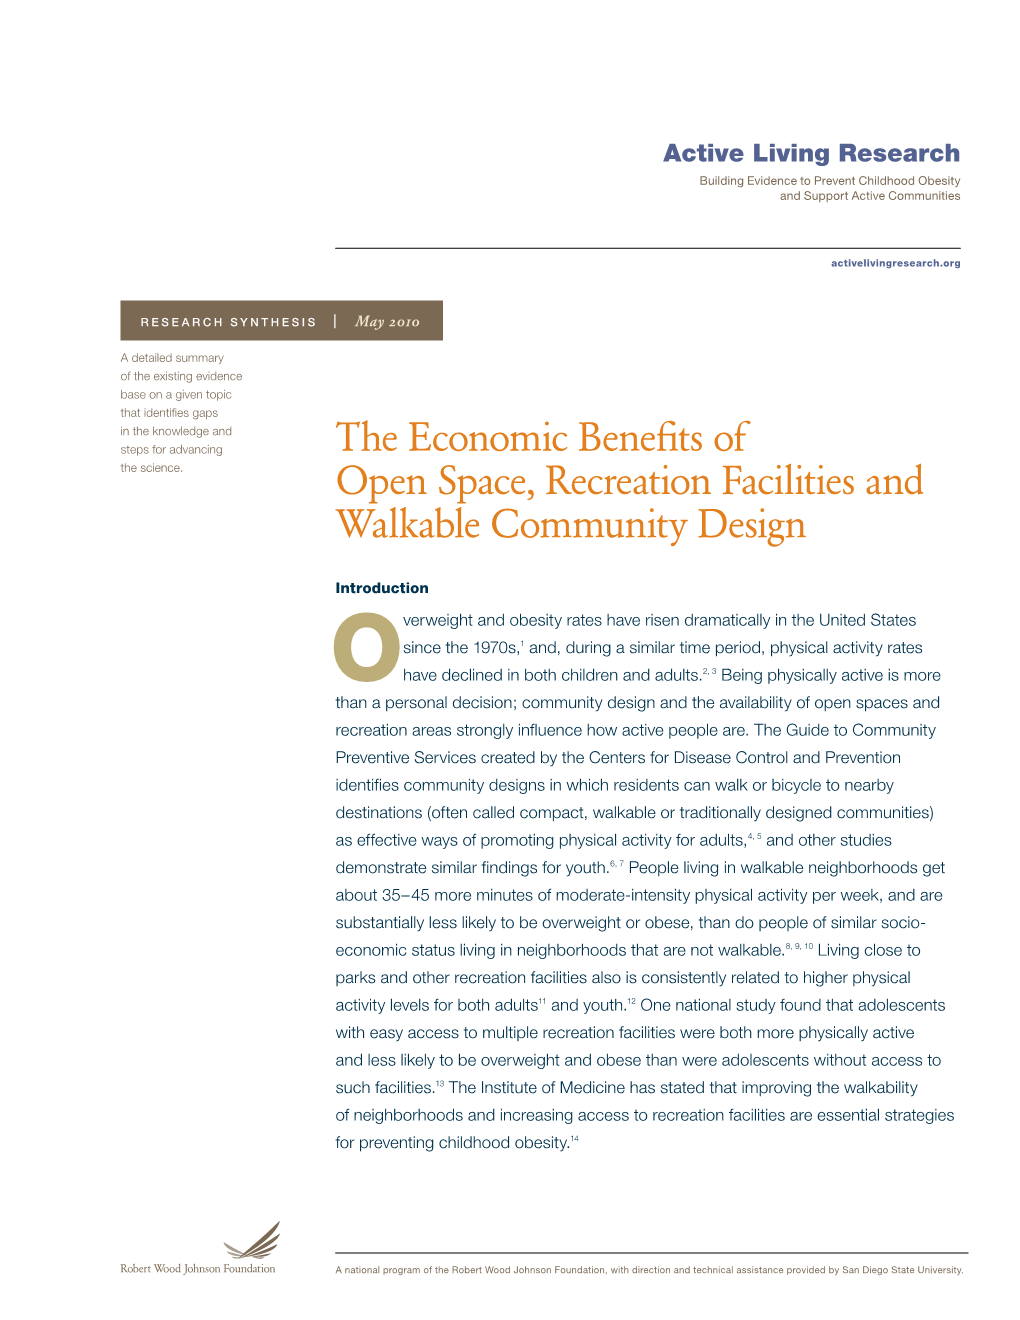 Economic Benefits of Open Space, Recreation